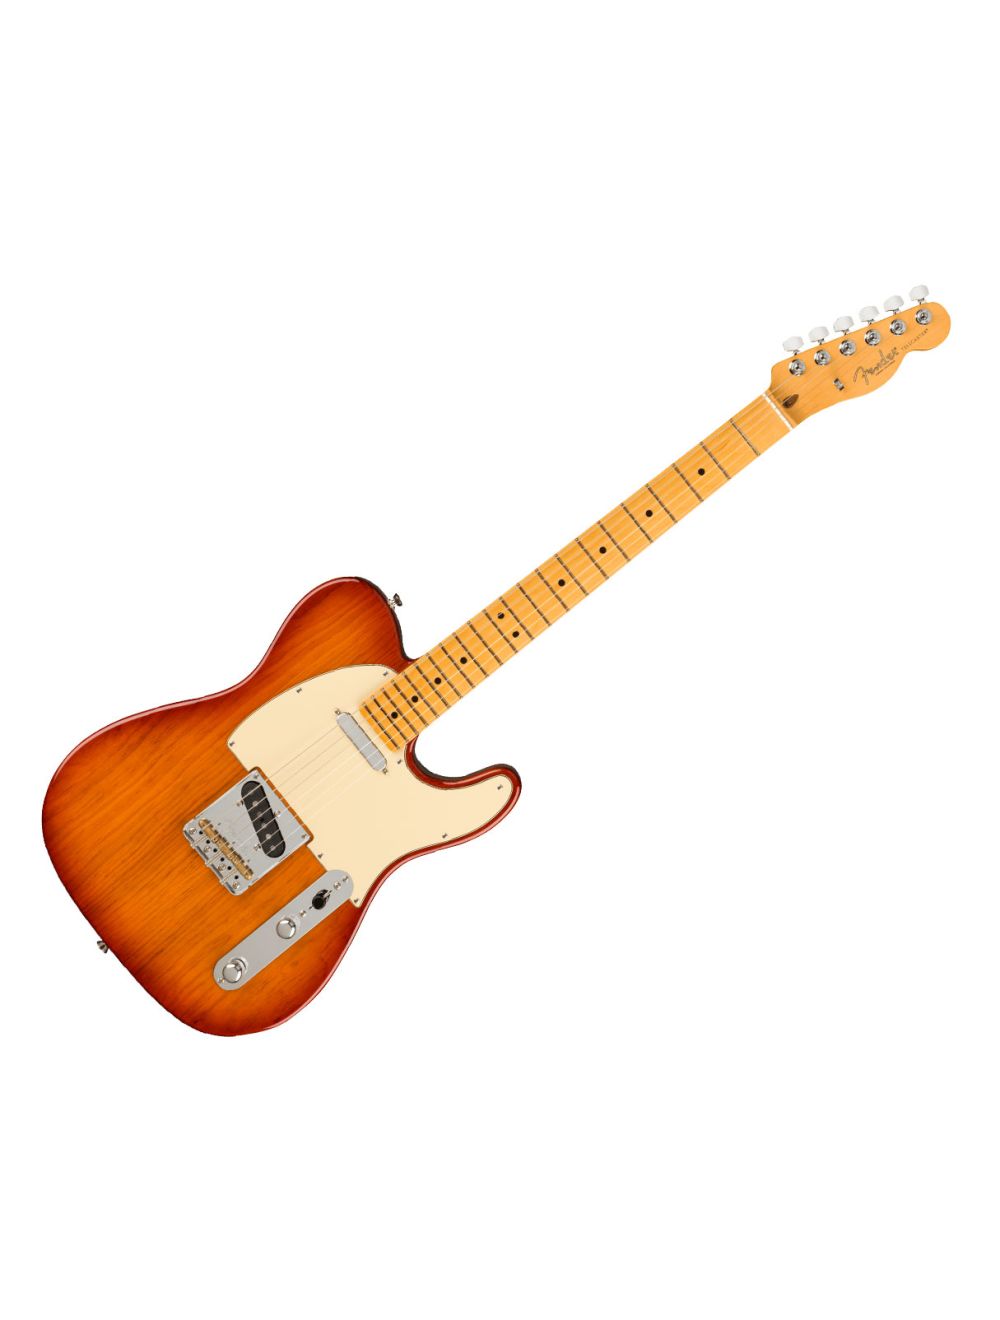 Fender American Professional II Telecaster guitar - Sienna Sunburst w/ Maple FB $1199